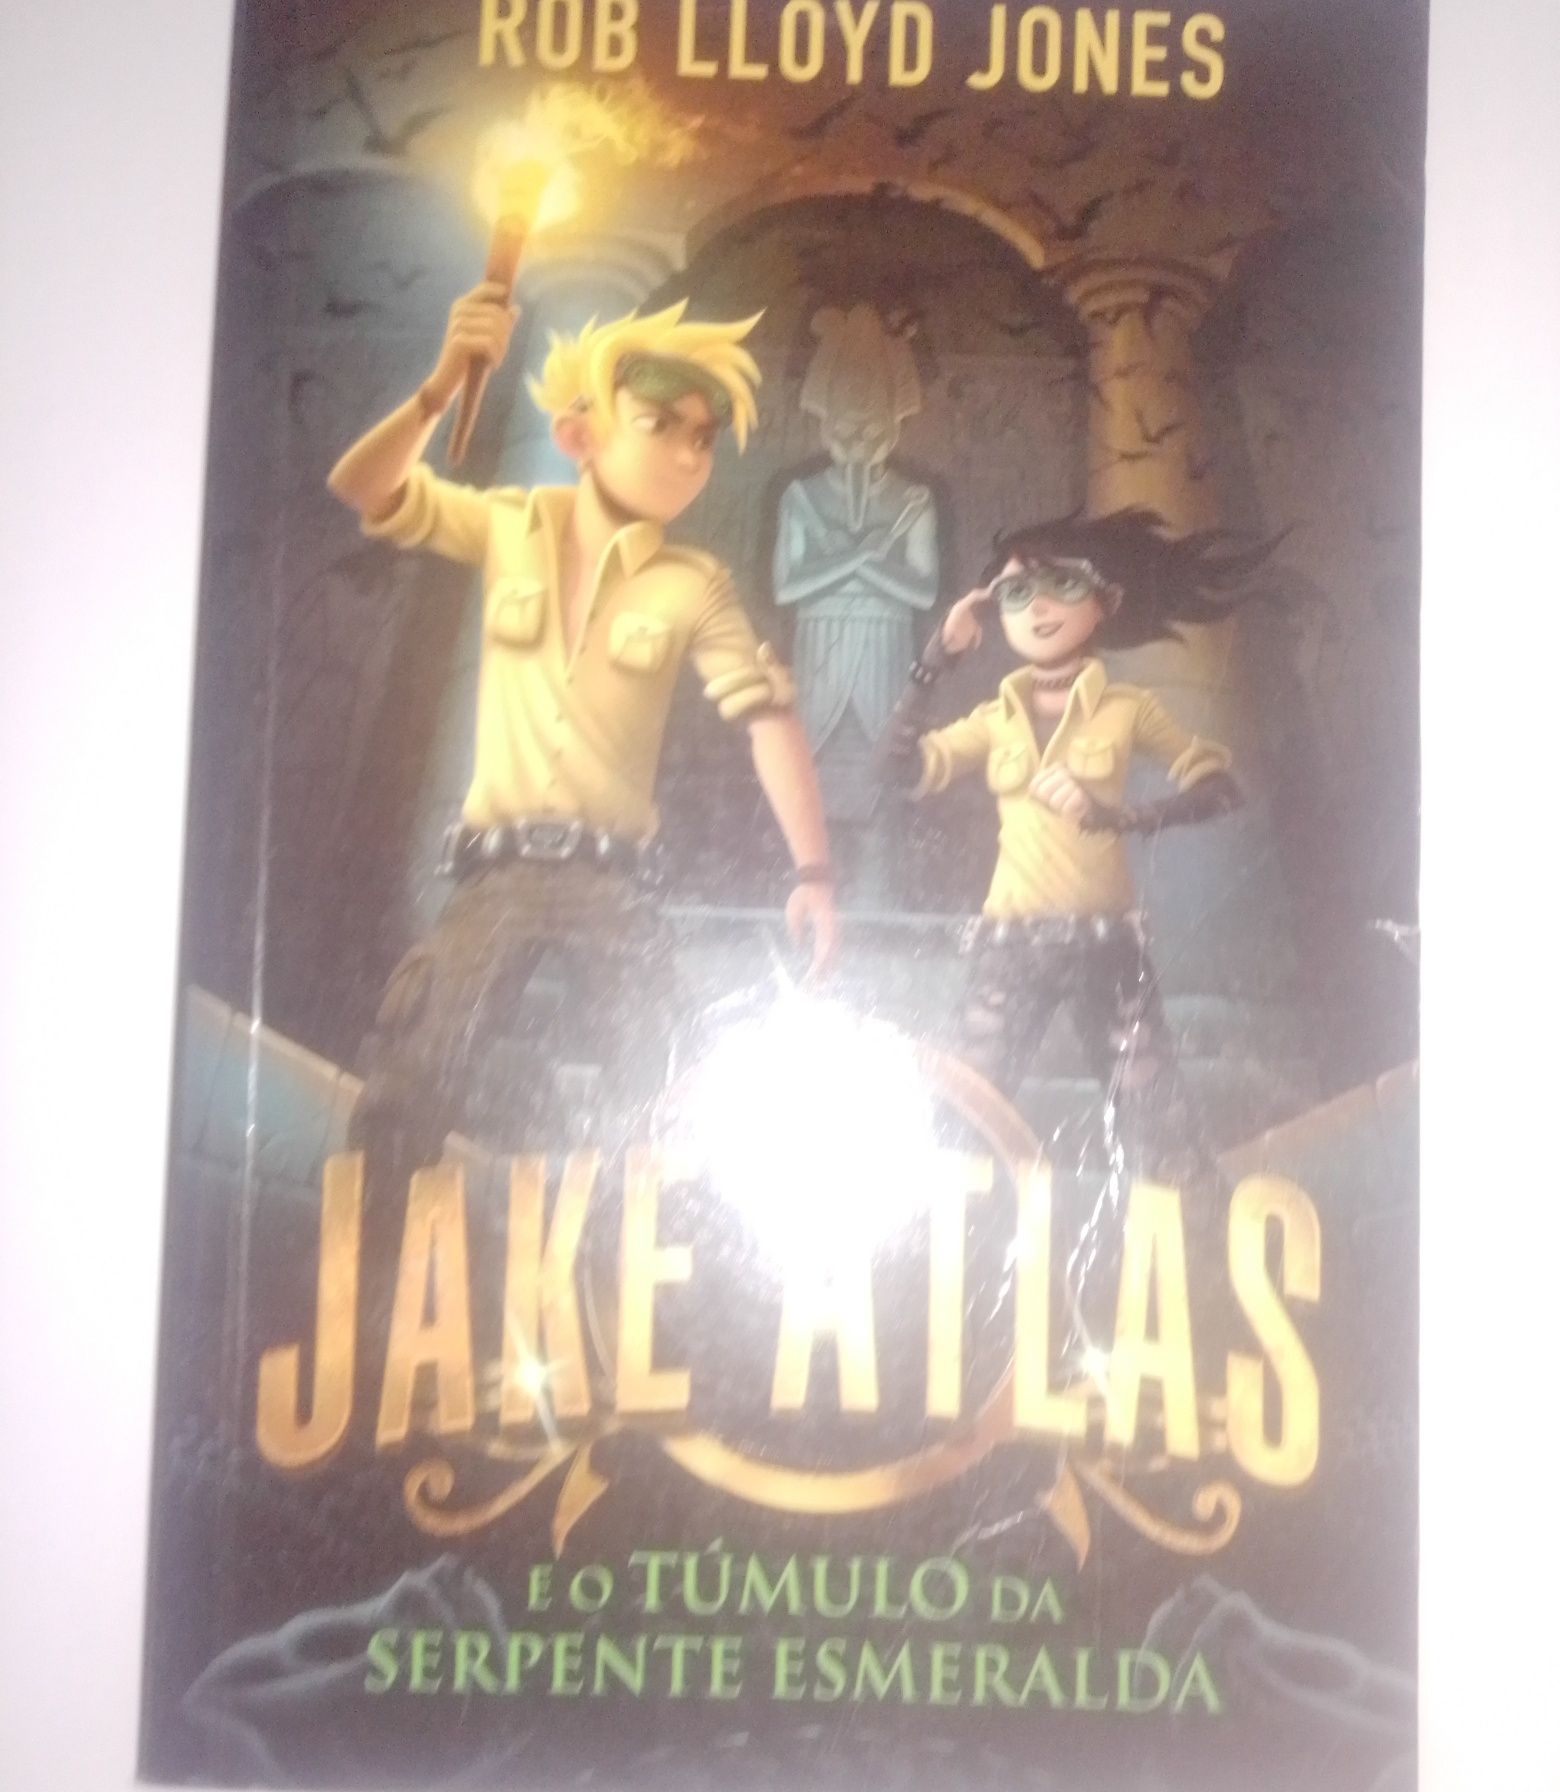 Jake Atlas e o túmulo da serpente esmeralda.